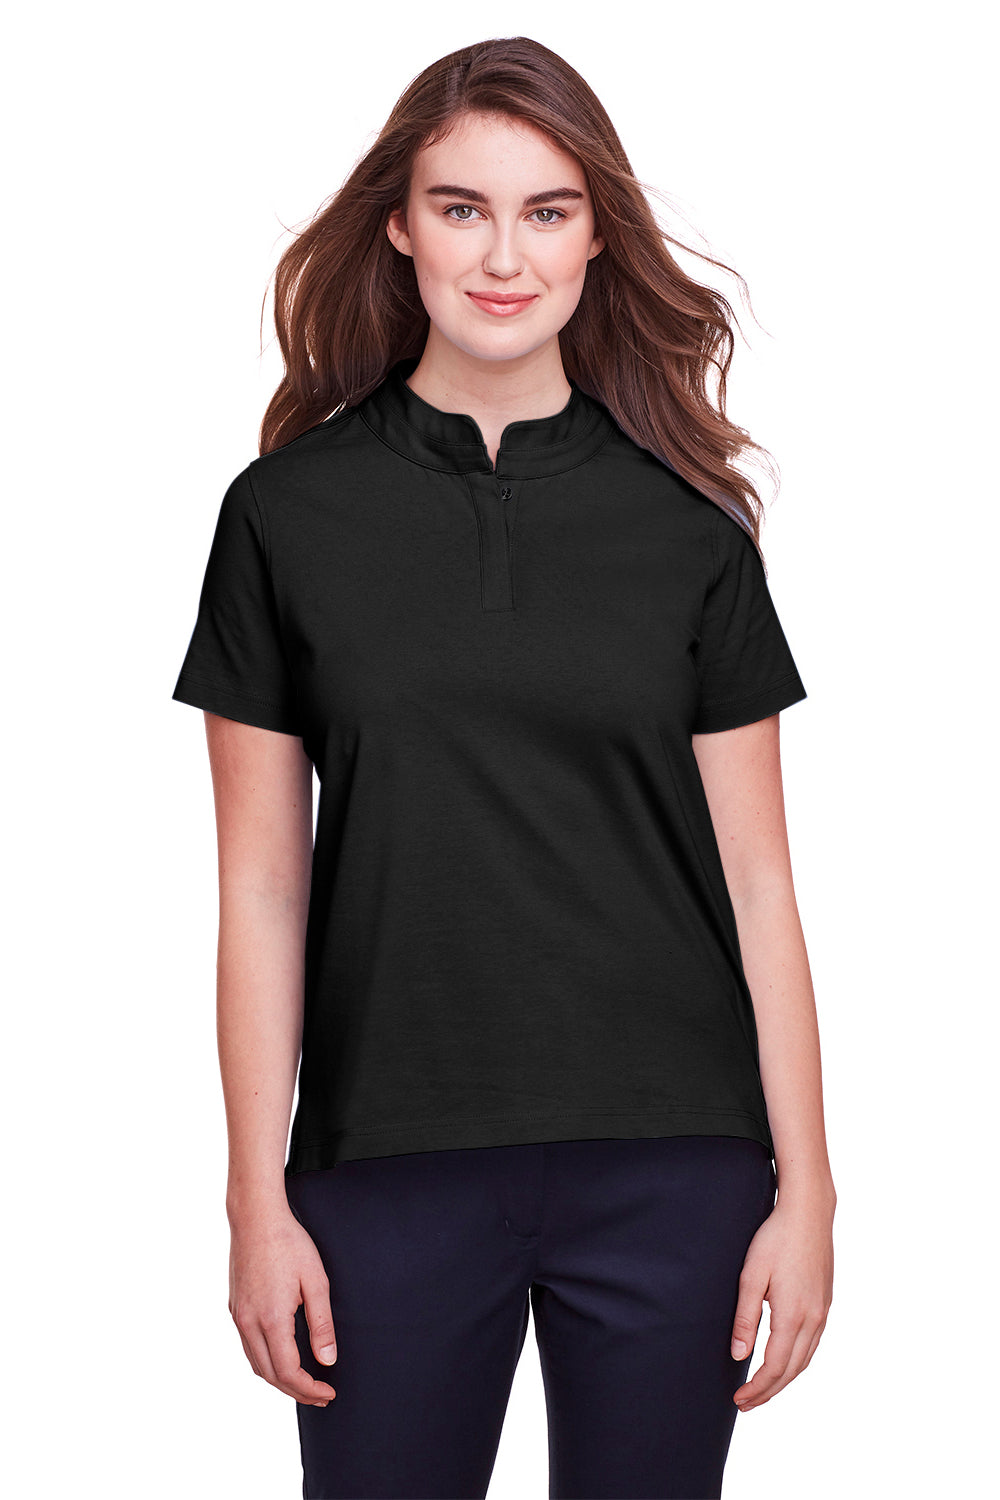 UltraClub UC105W Womens Lakeshore Performance Moisture Wicking Short Sleeve Polo Shirt Black Front